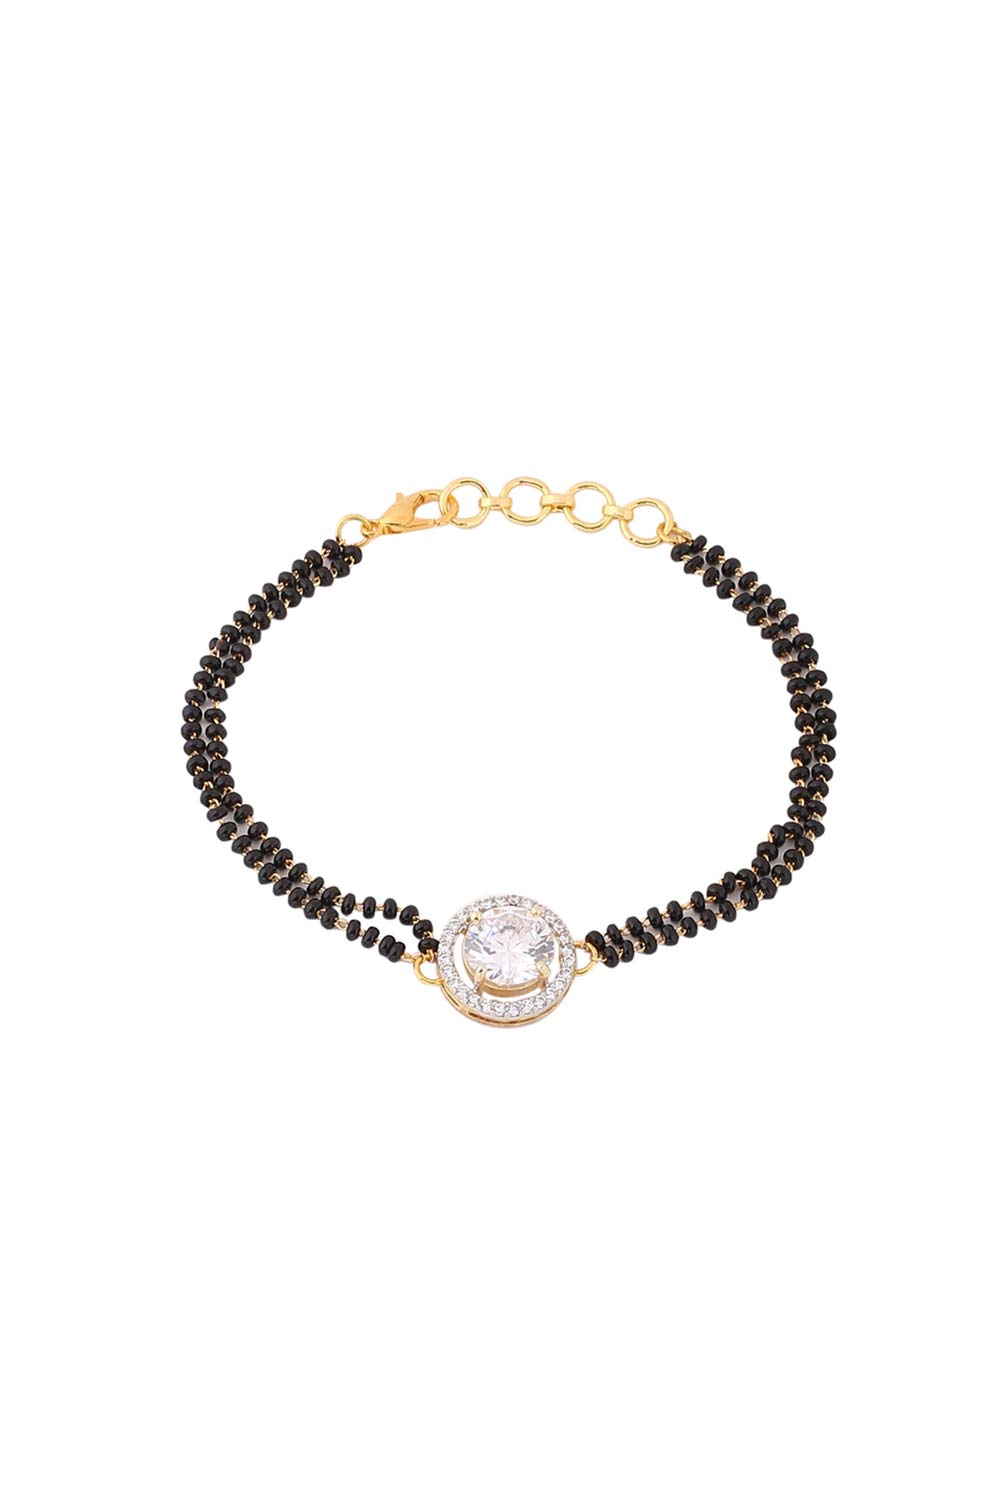 Buy Black Beaded And Ad Stone Studded Mangalsutra Bracelet Online - Side